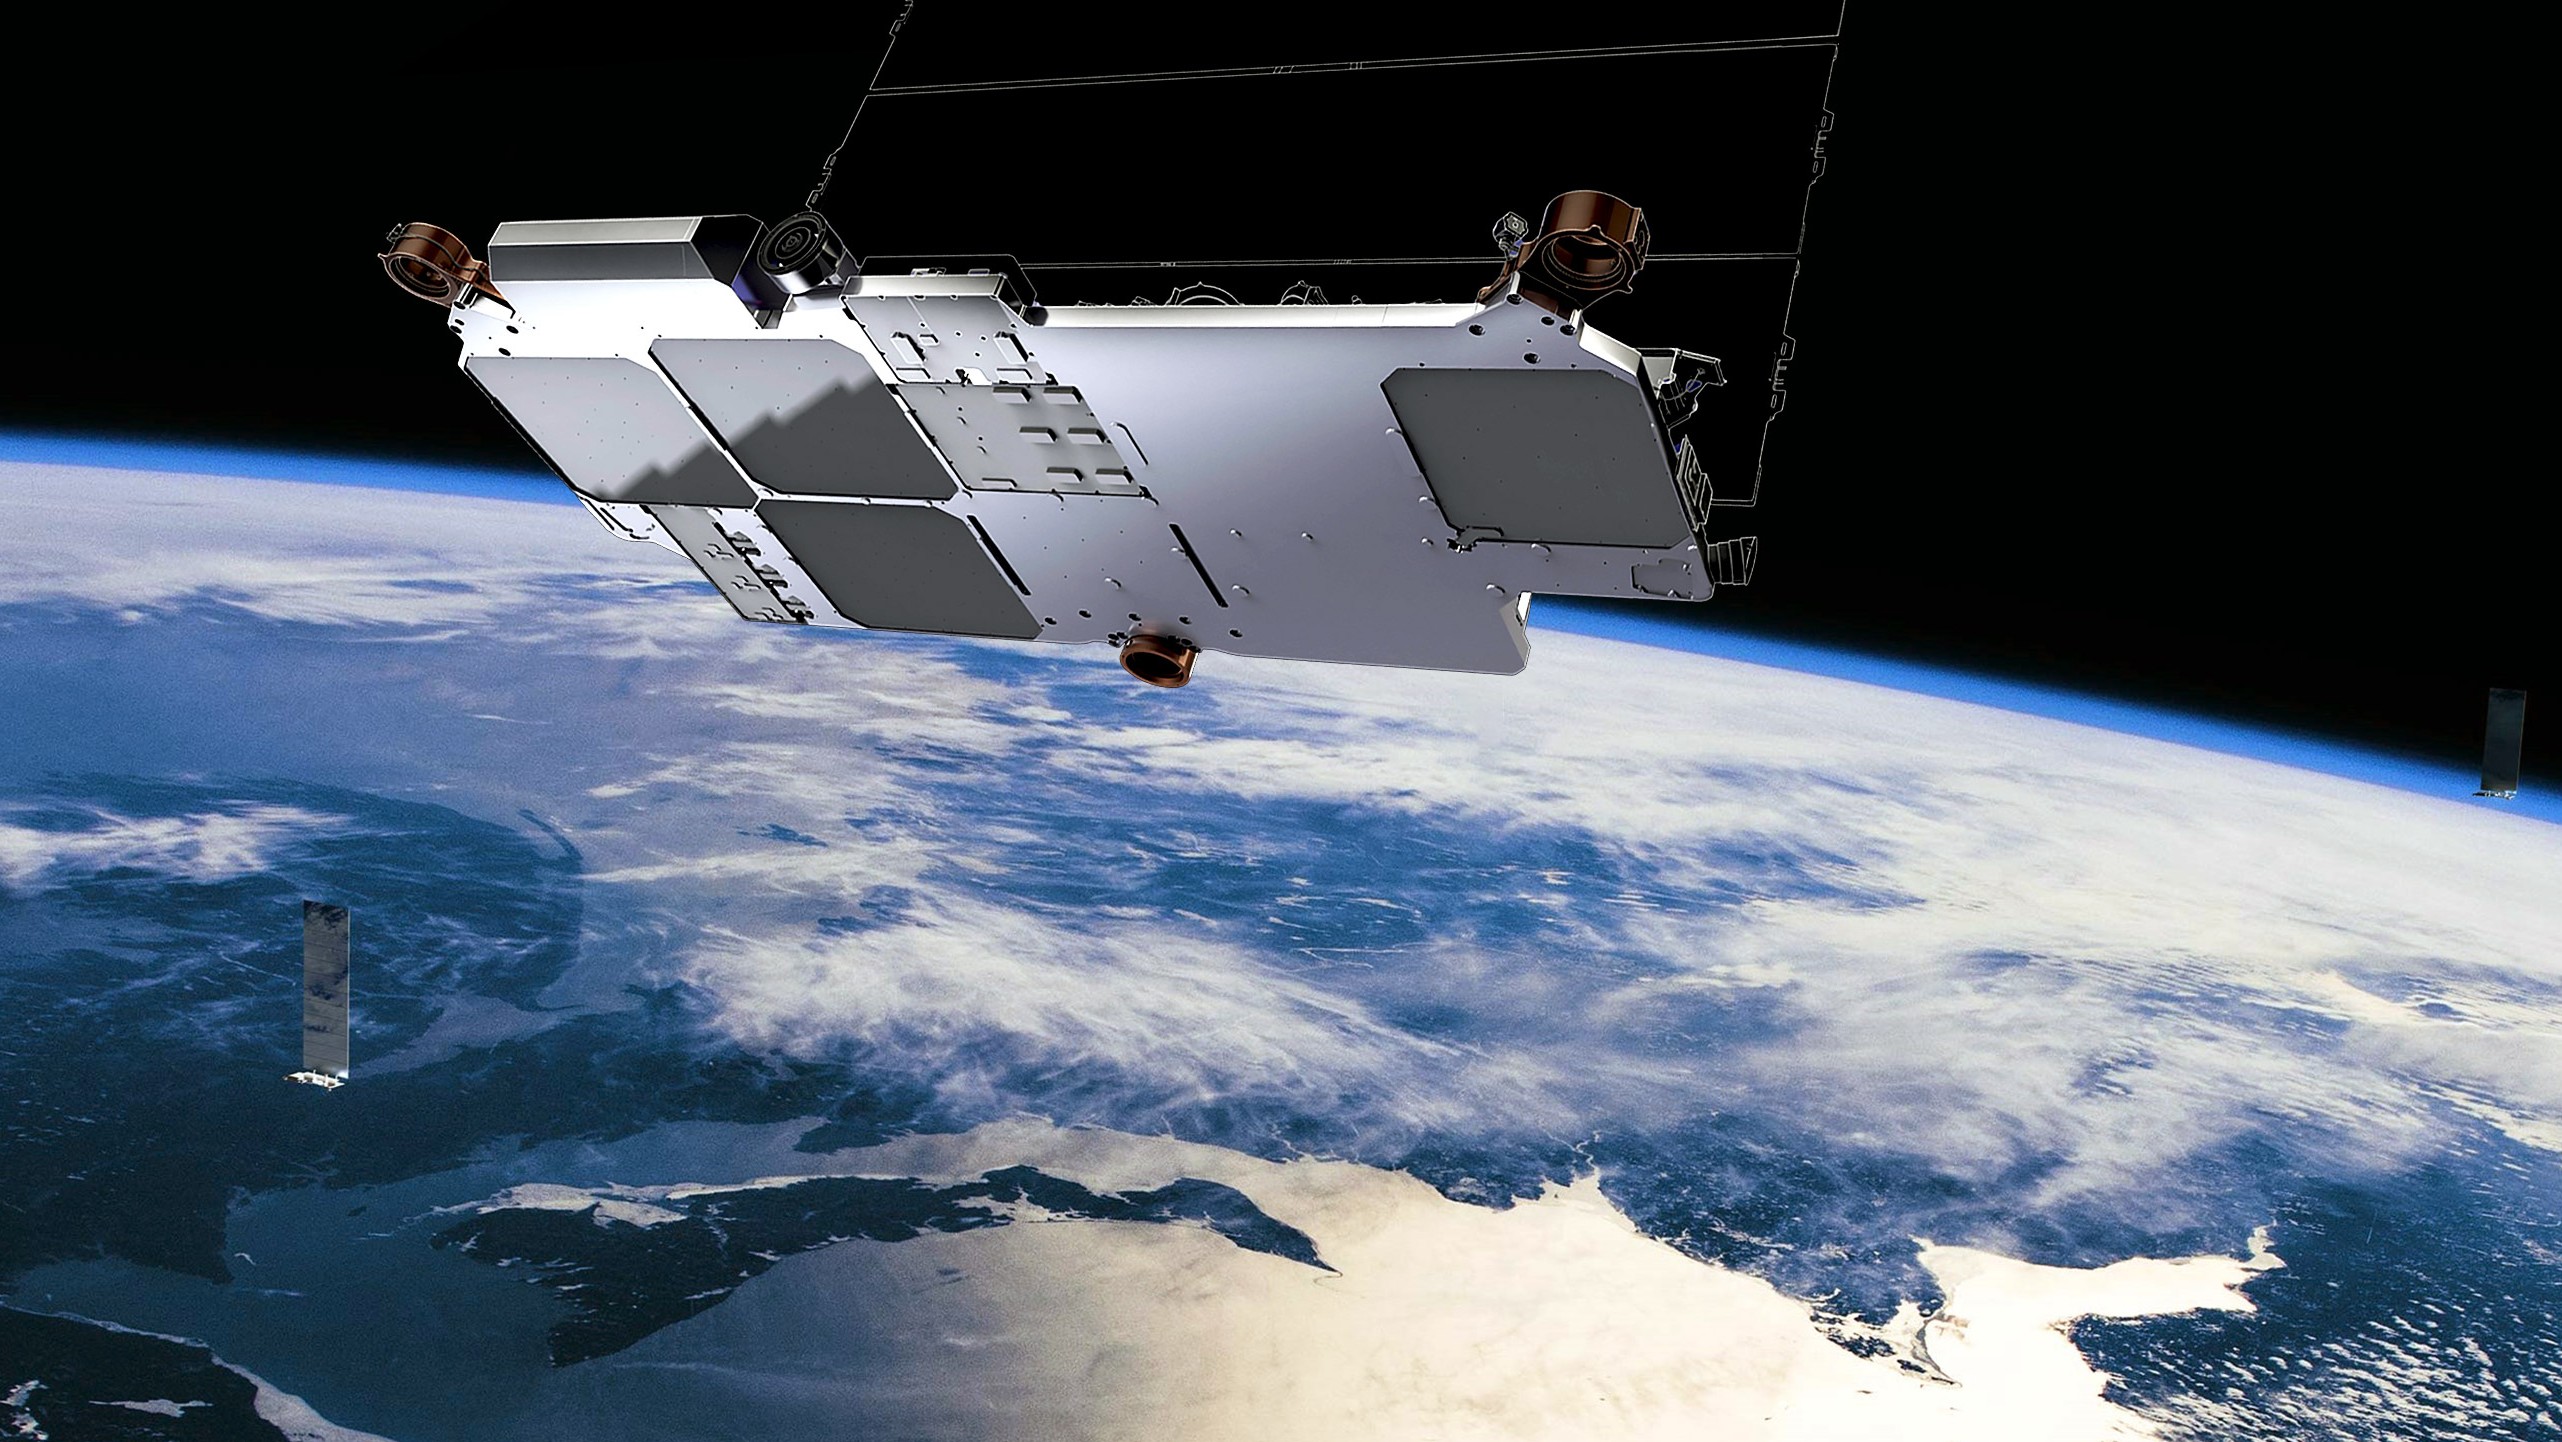 Starlink-satellite-bus-SpaceX-Teslarati-orbit-edit-2-c.jpg